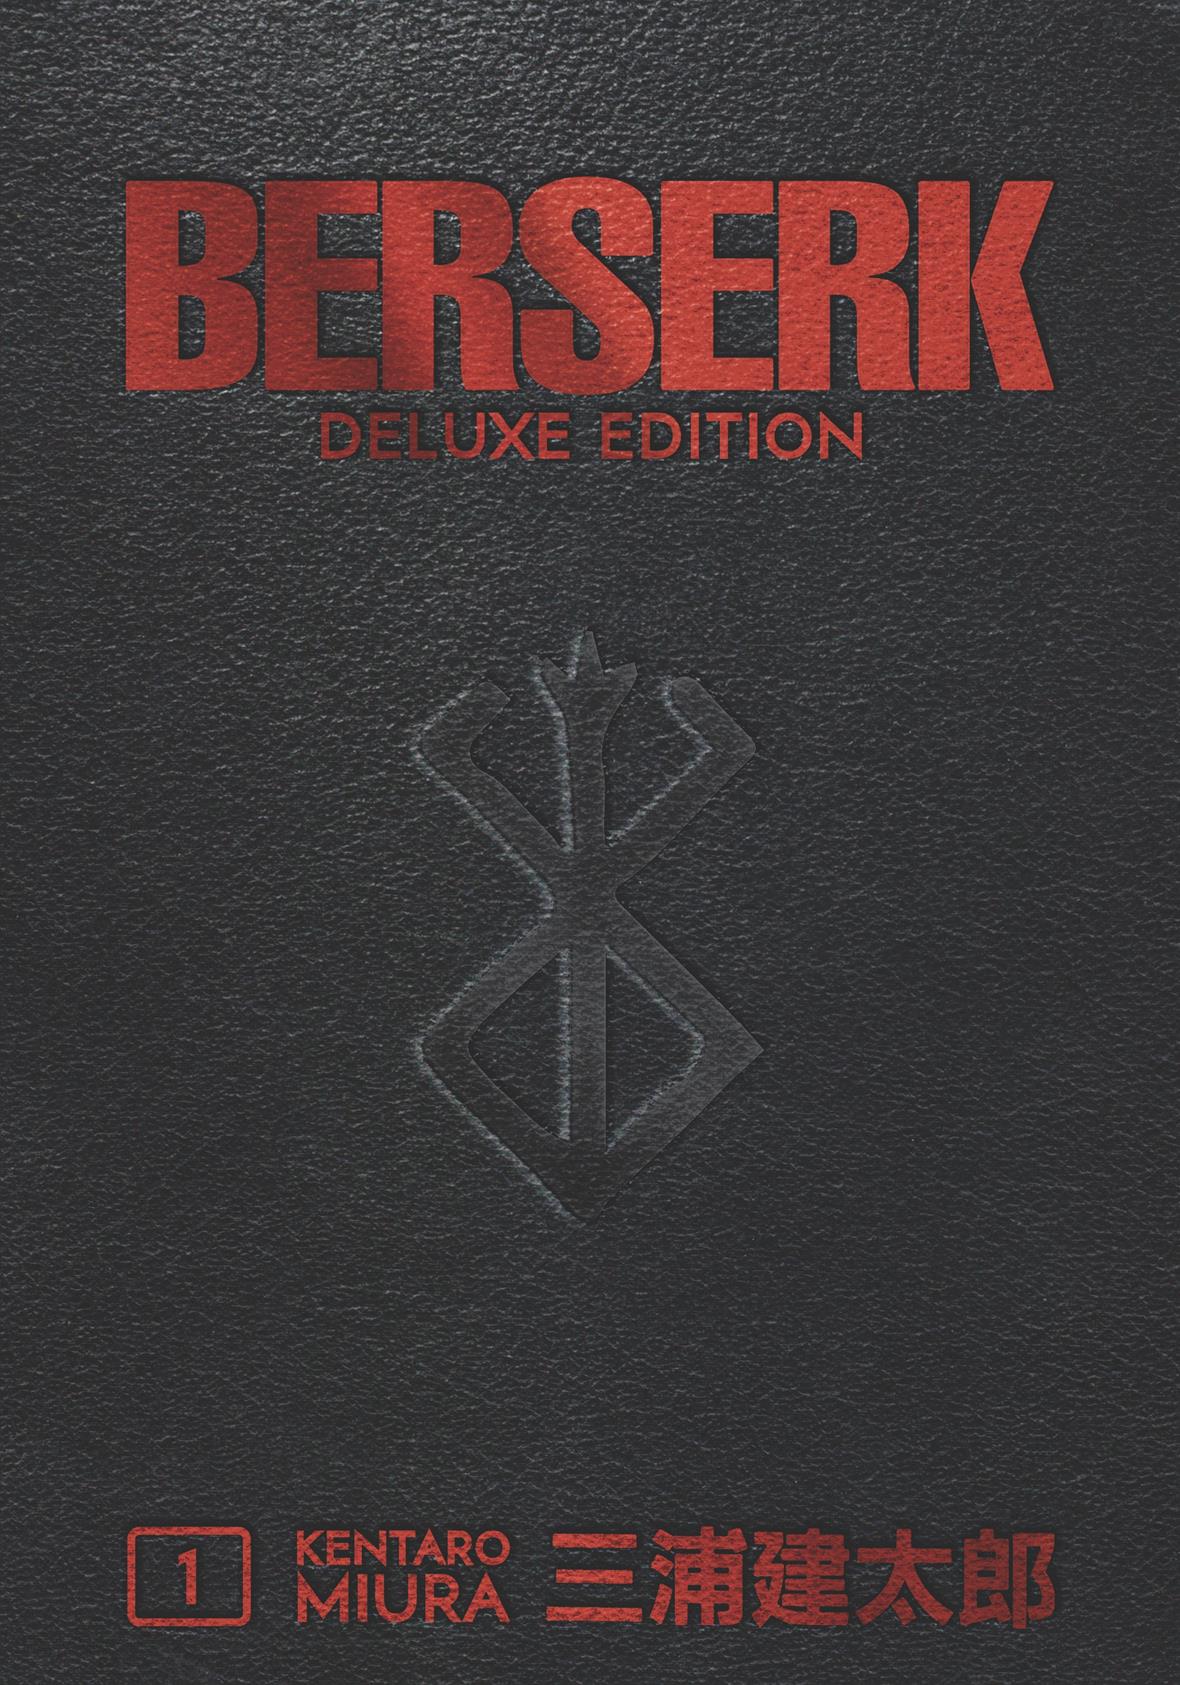 The Behemoth of Manga Berserk to Receive Deluxe Editions at Dark